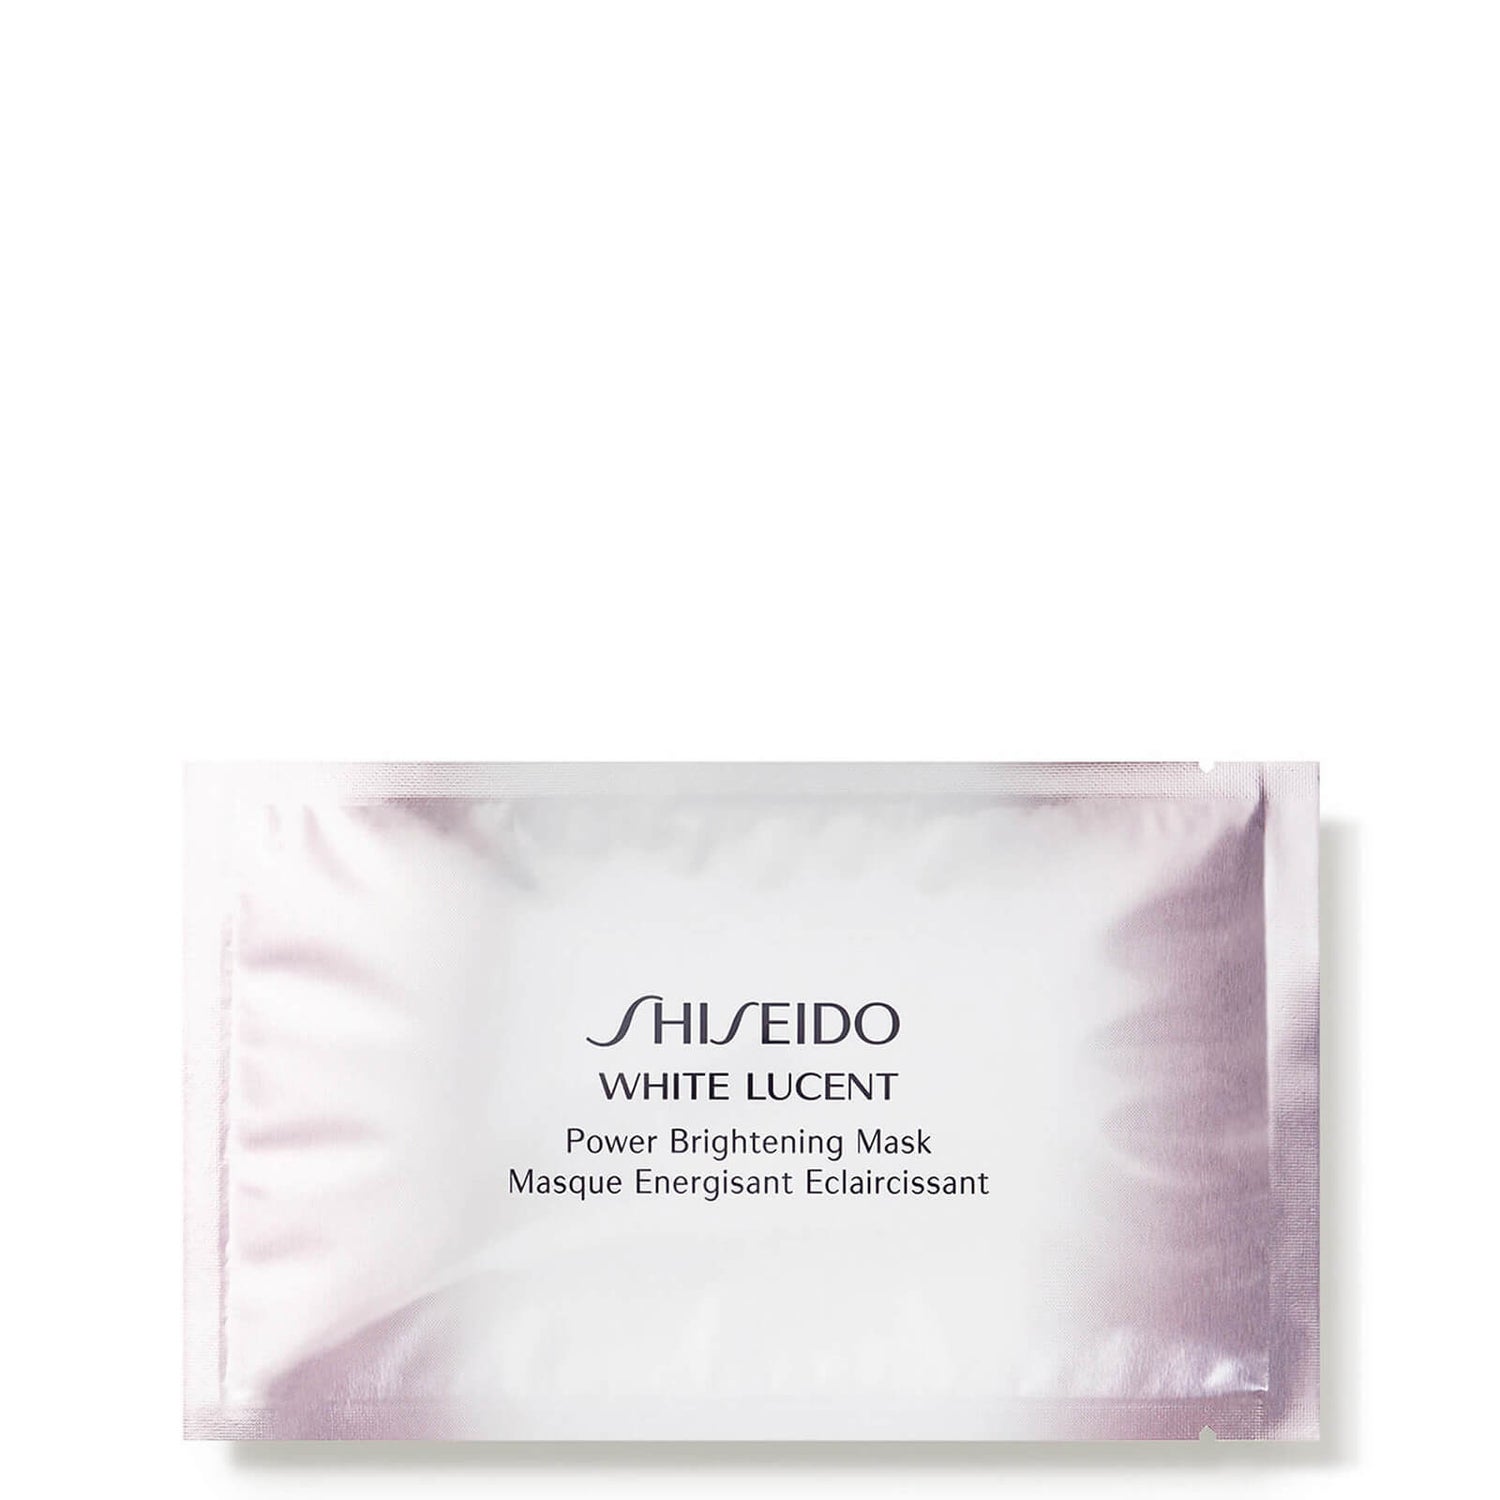 Shiseido White Lucent Power Brightening Mask (6 count)